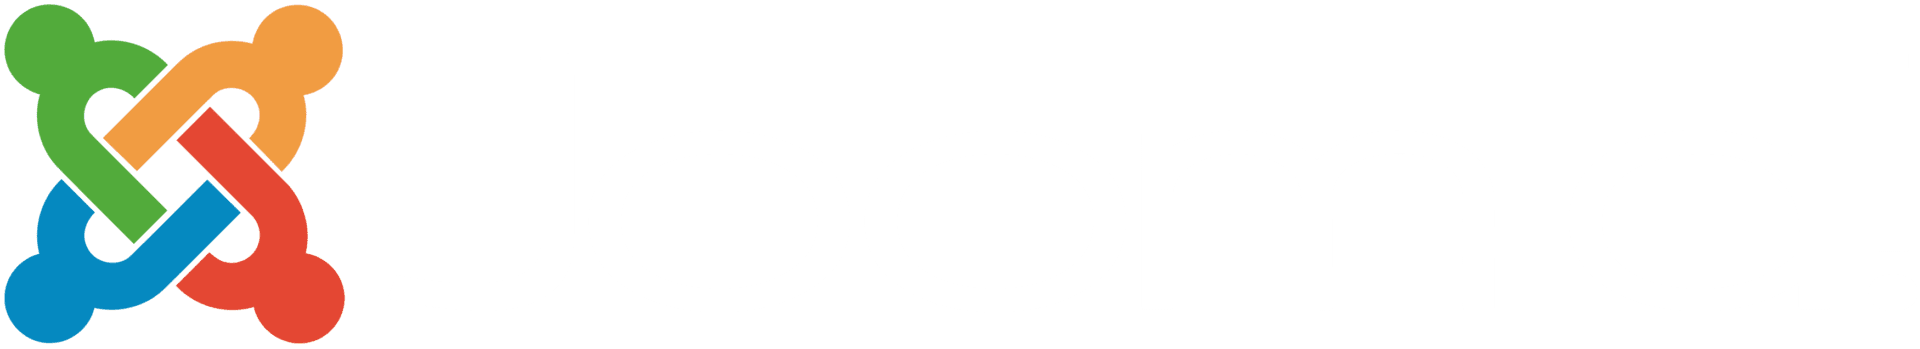 Joomla Logo Herreamientas